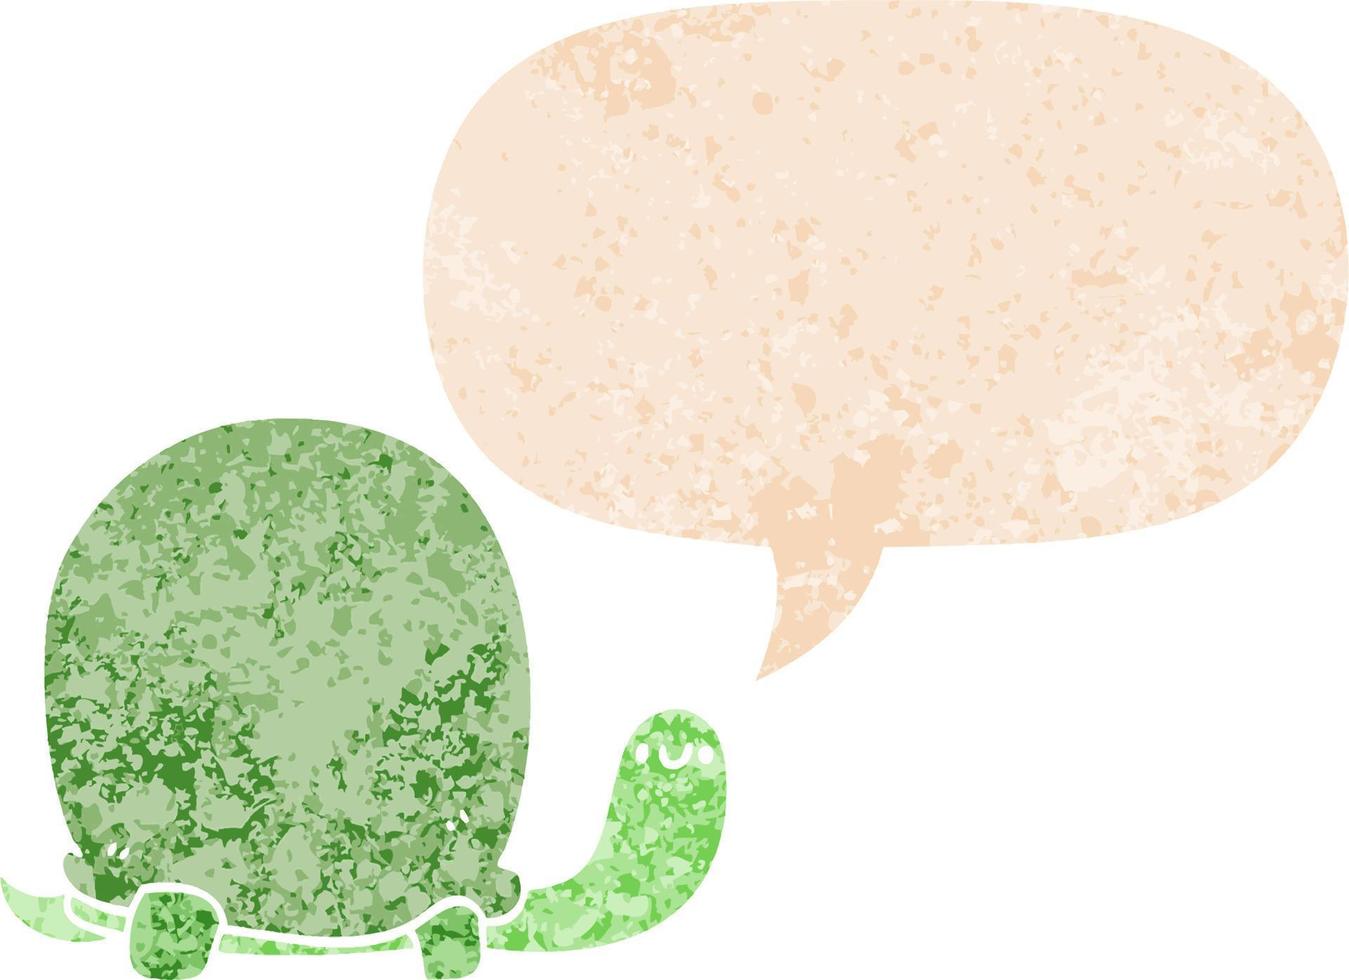 tartaruga de desenho animado bonito e bolha de fala em estilo retrô texturizado vetor